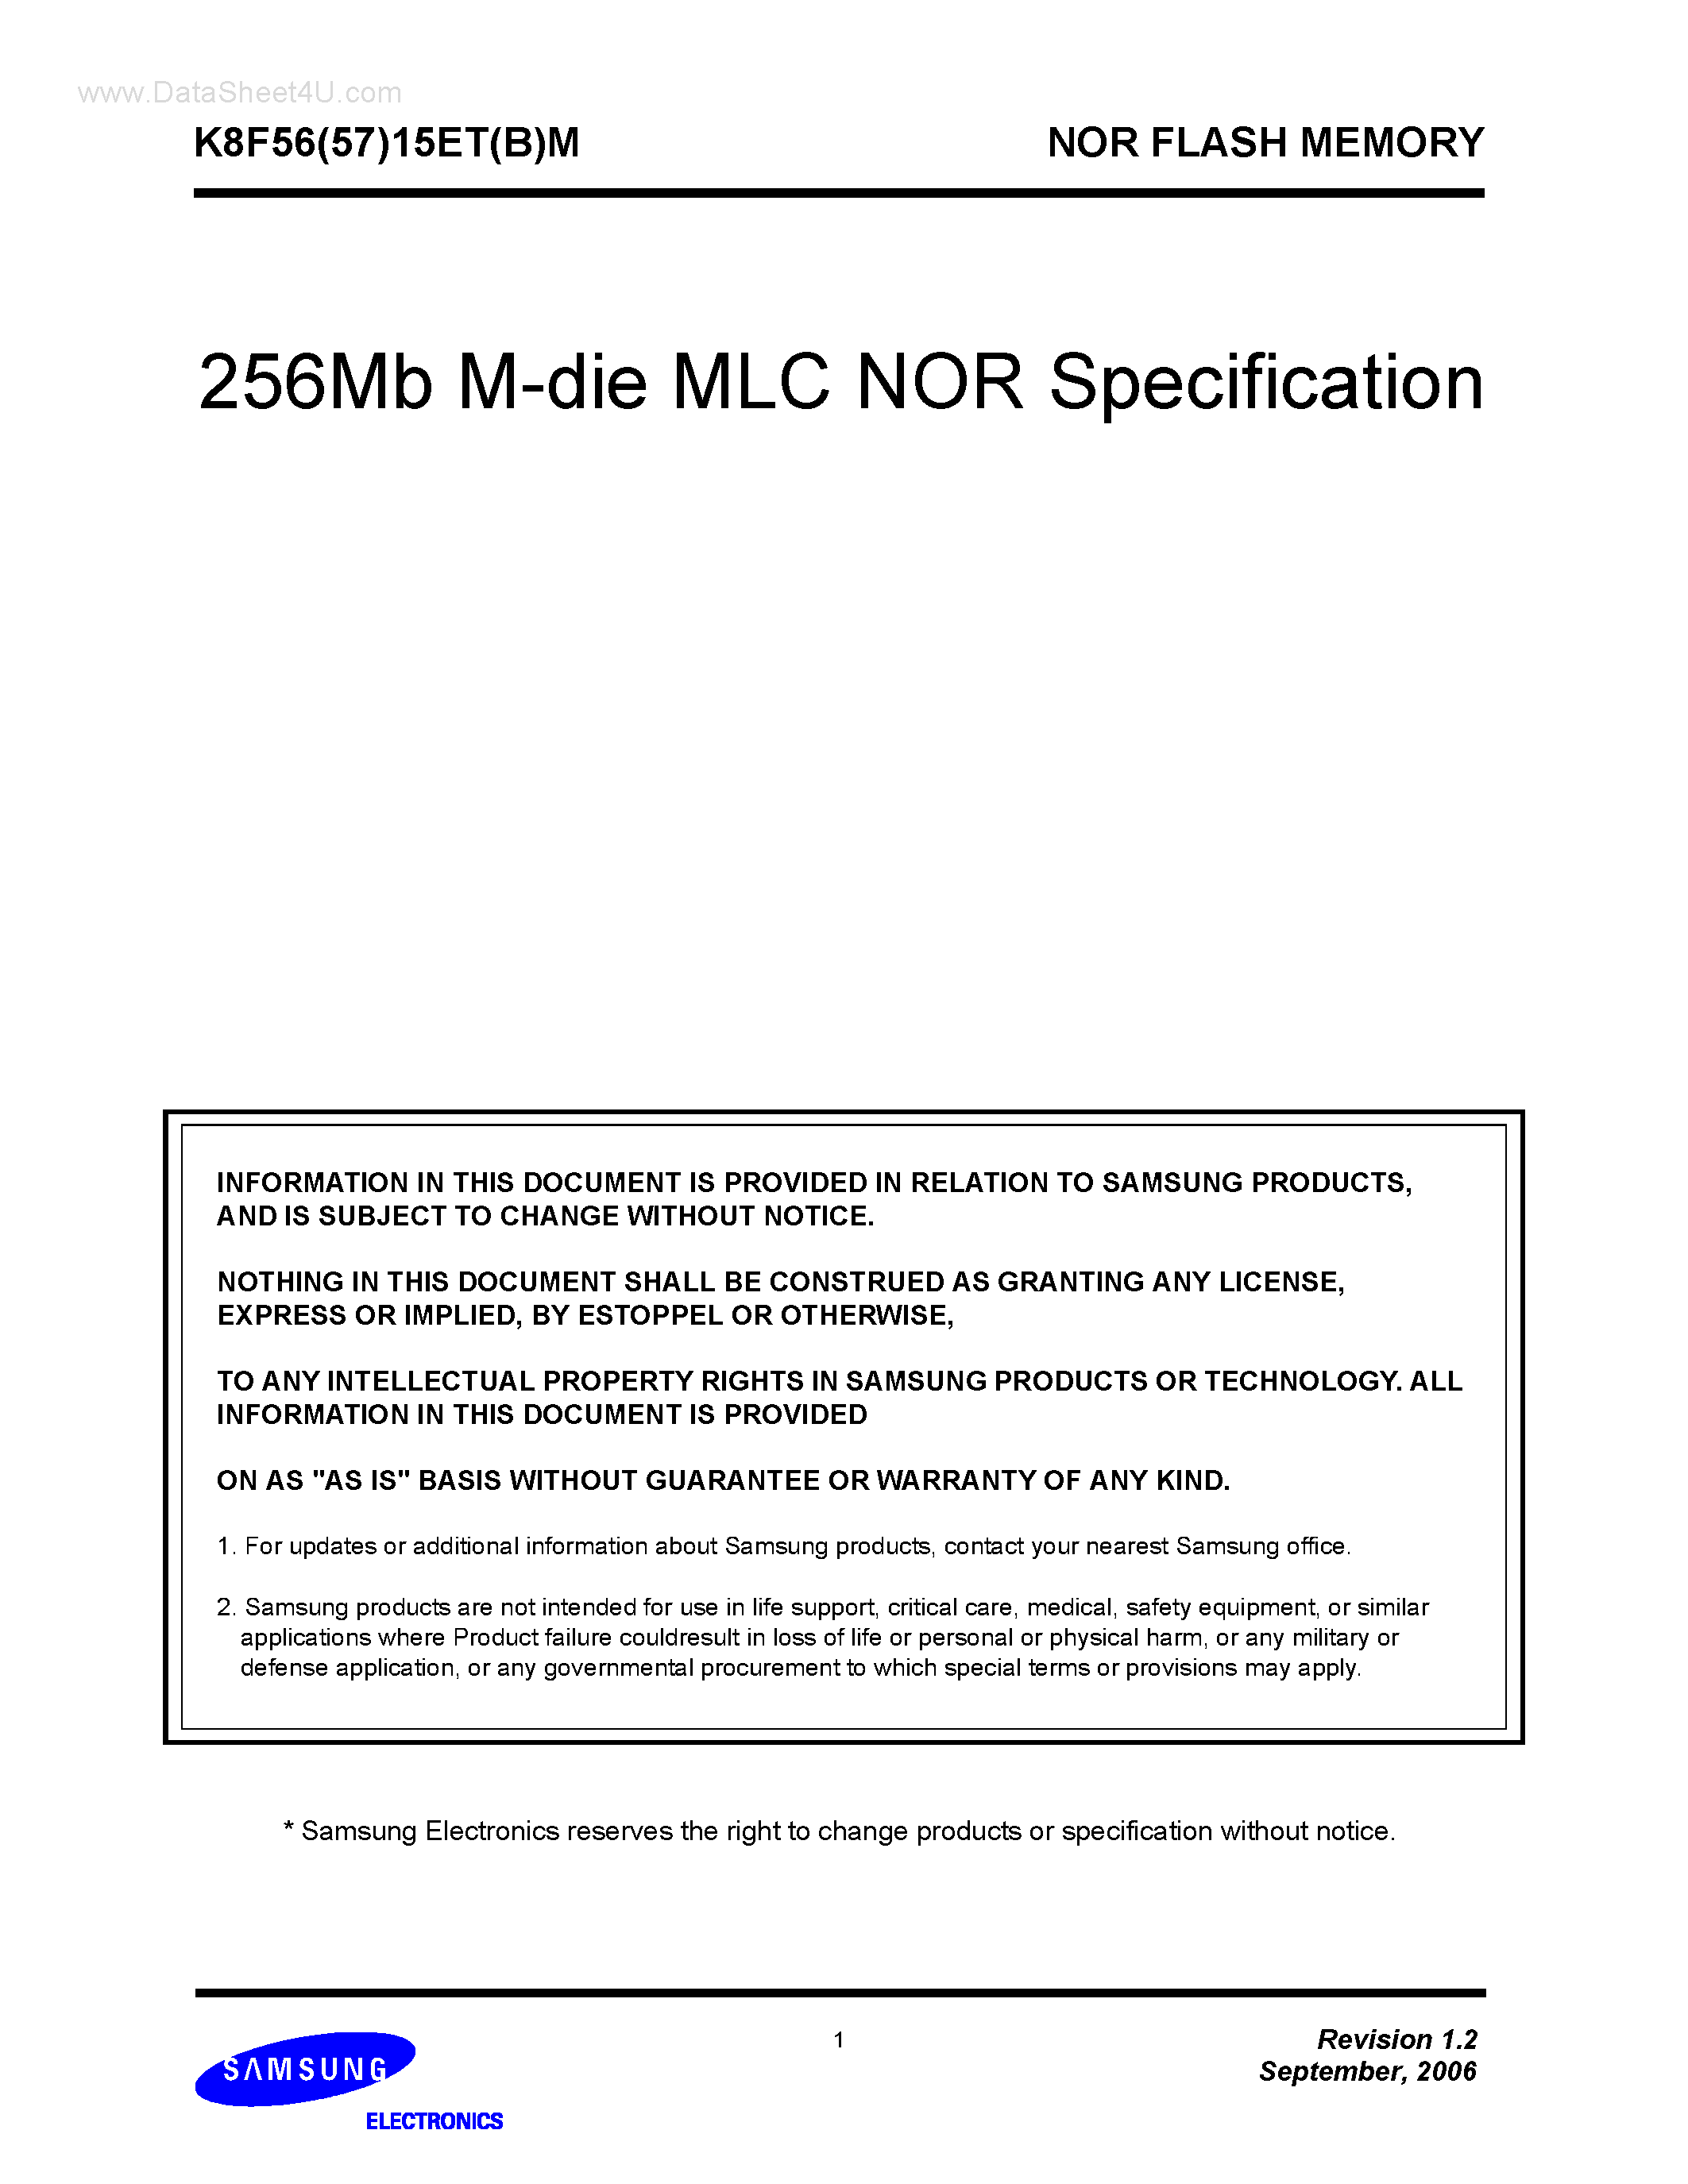 Даташит K8F5615EBM - 256Mb M-die MLC NOR Specification страница 1